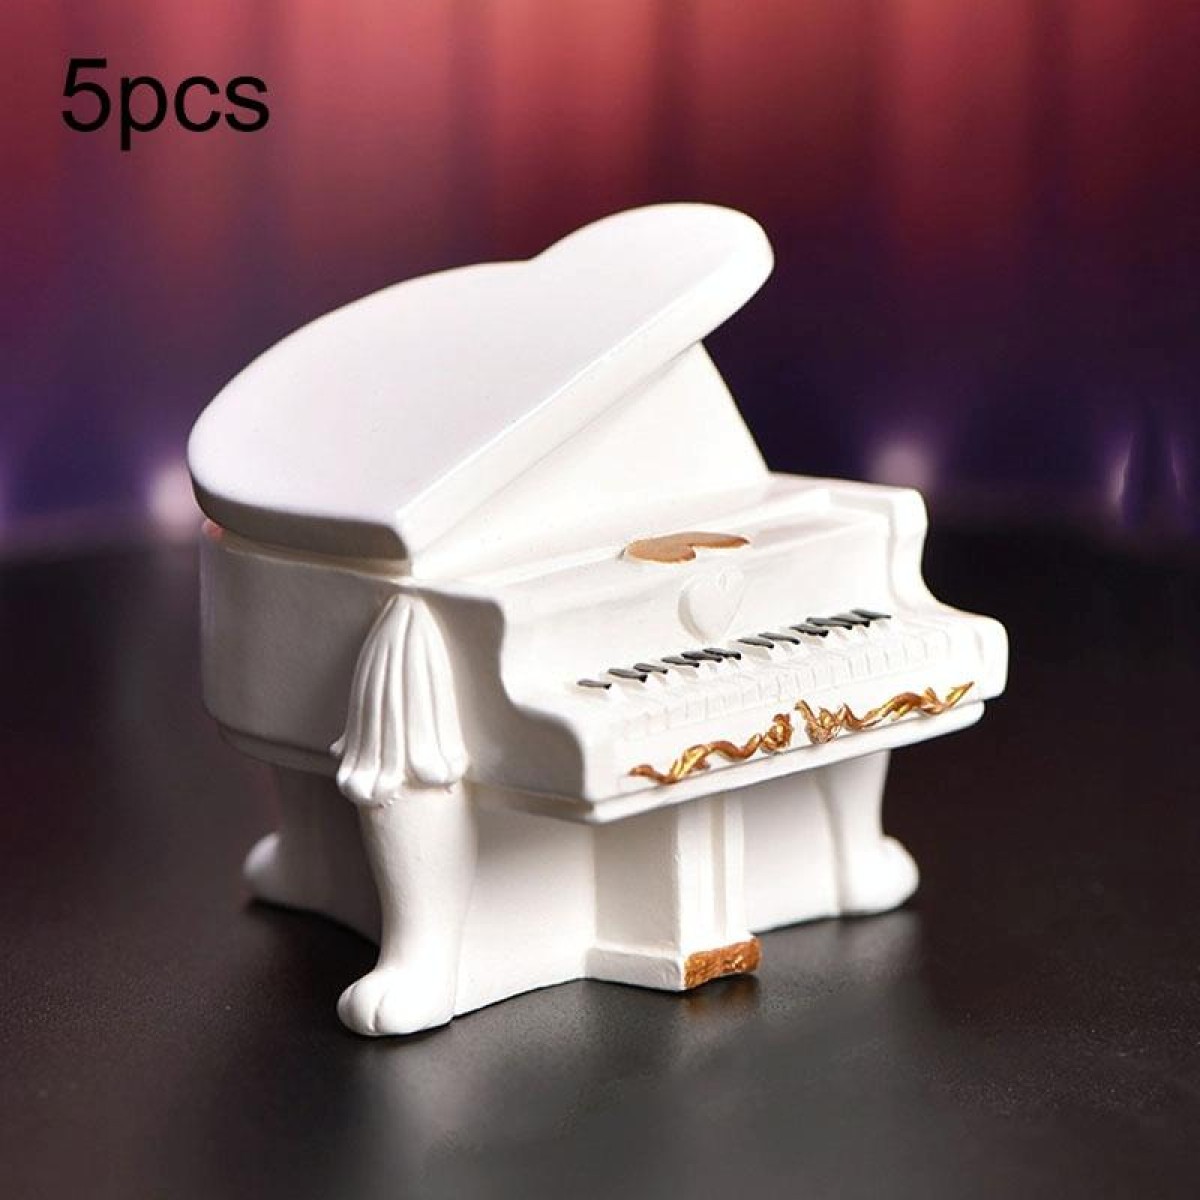 5pcs Micro Landscape Simulation Musical Instrument Resin Ornament Miniature Desktop Decoration, Style: No.13 White Piano